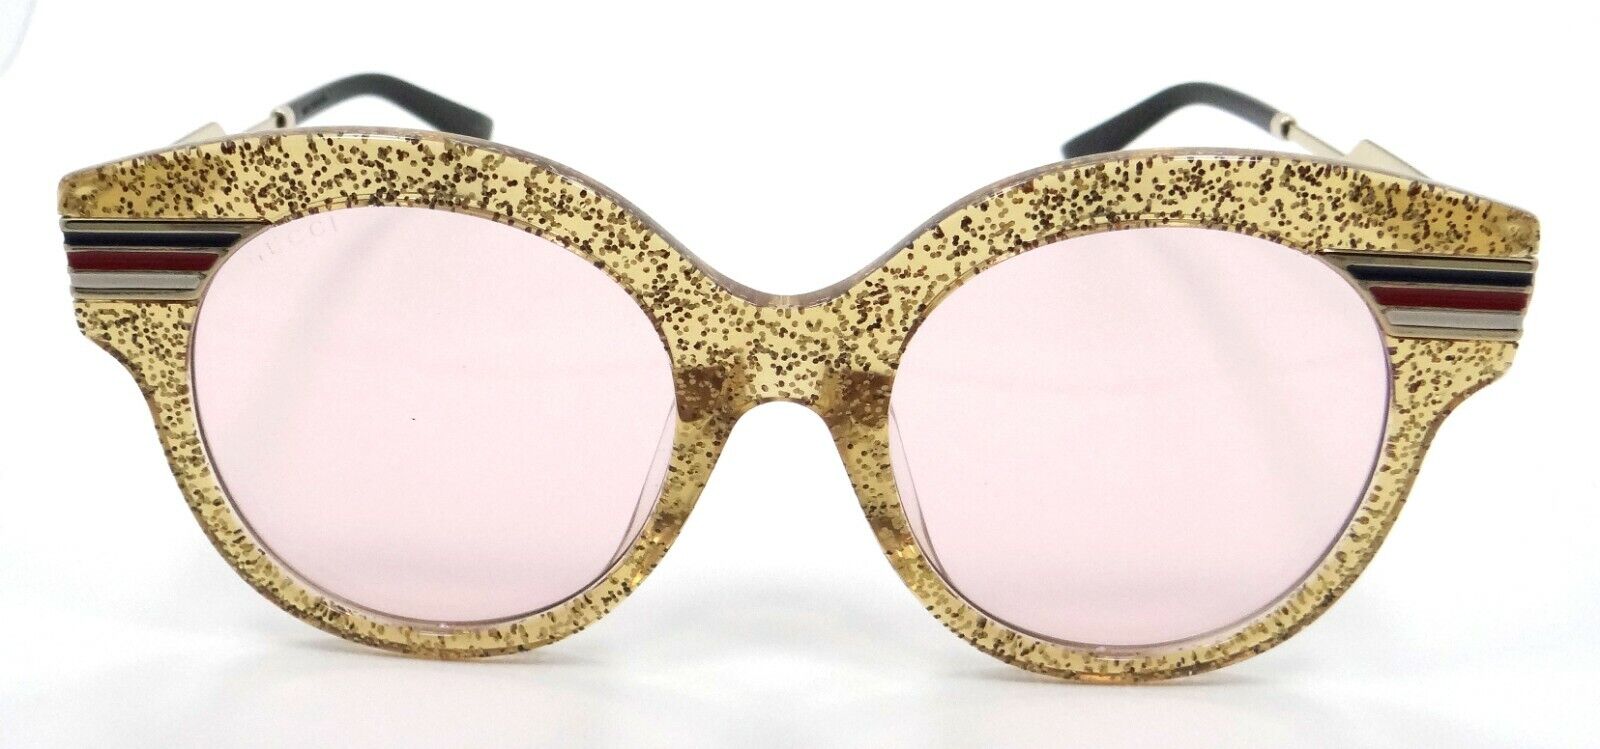 Gucci Sunglasses GG 0282SA 004 52-21-150 Glitter Gold / Pink Asian Fit Italy-889652126579-classypw.com-2